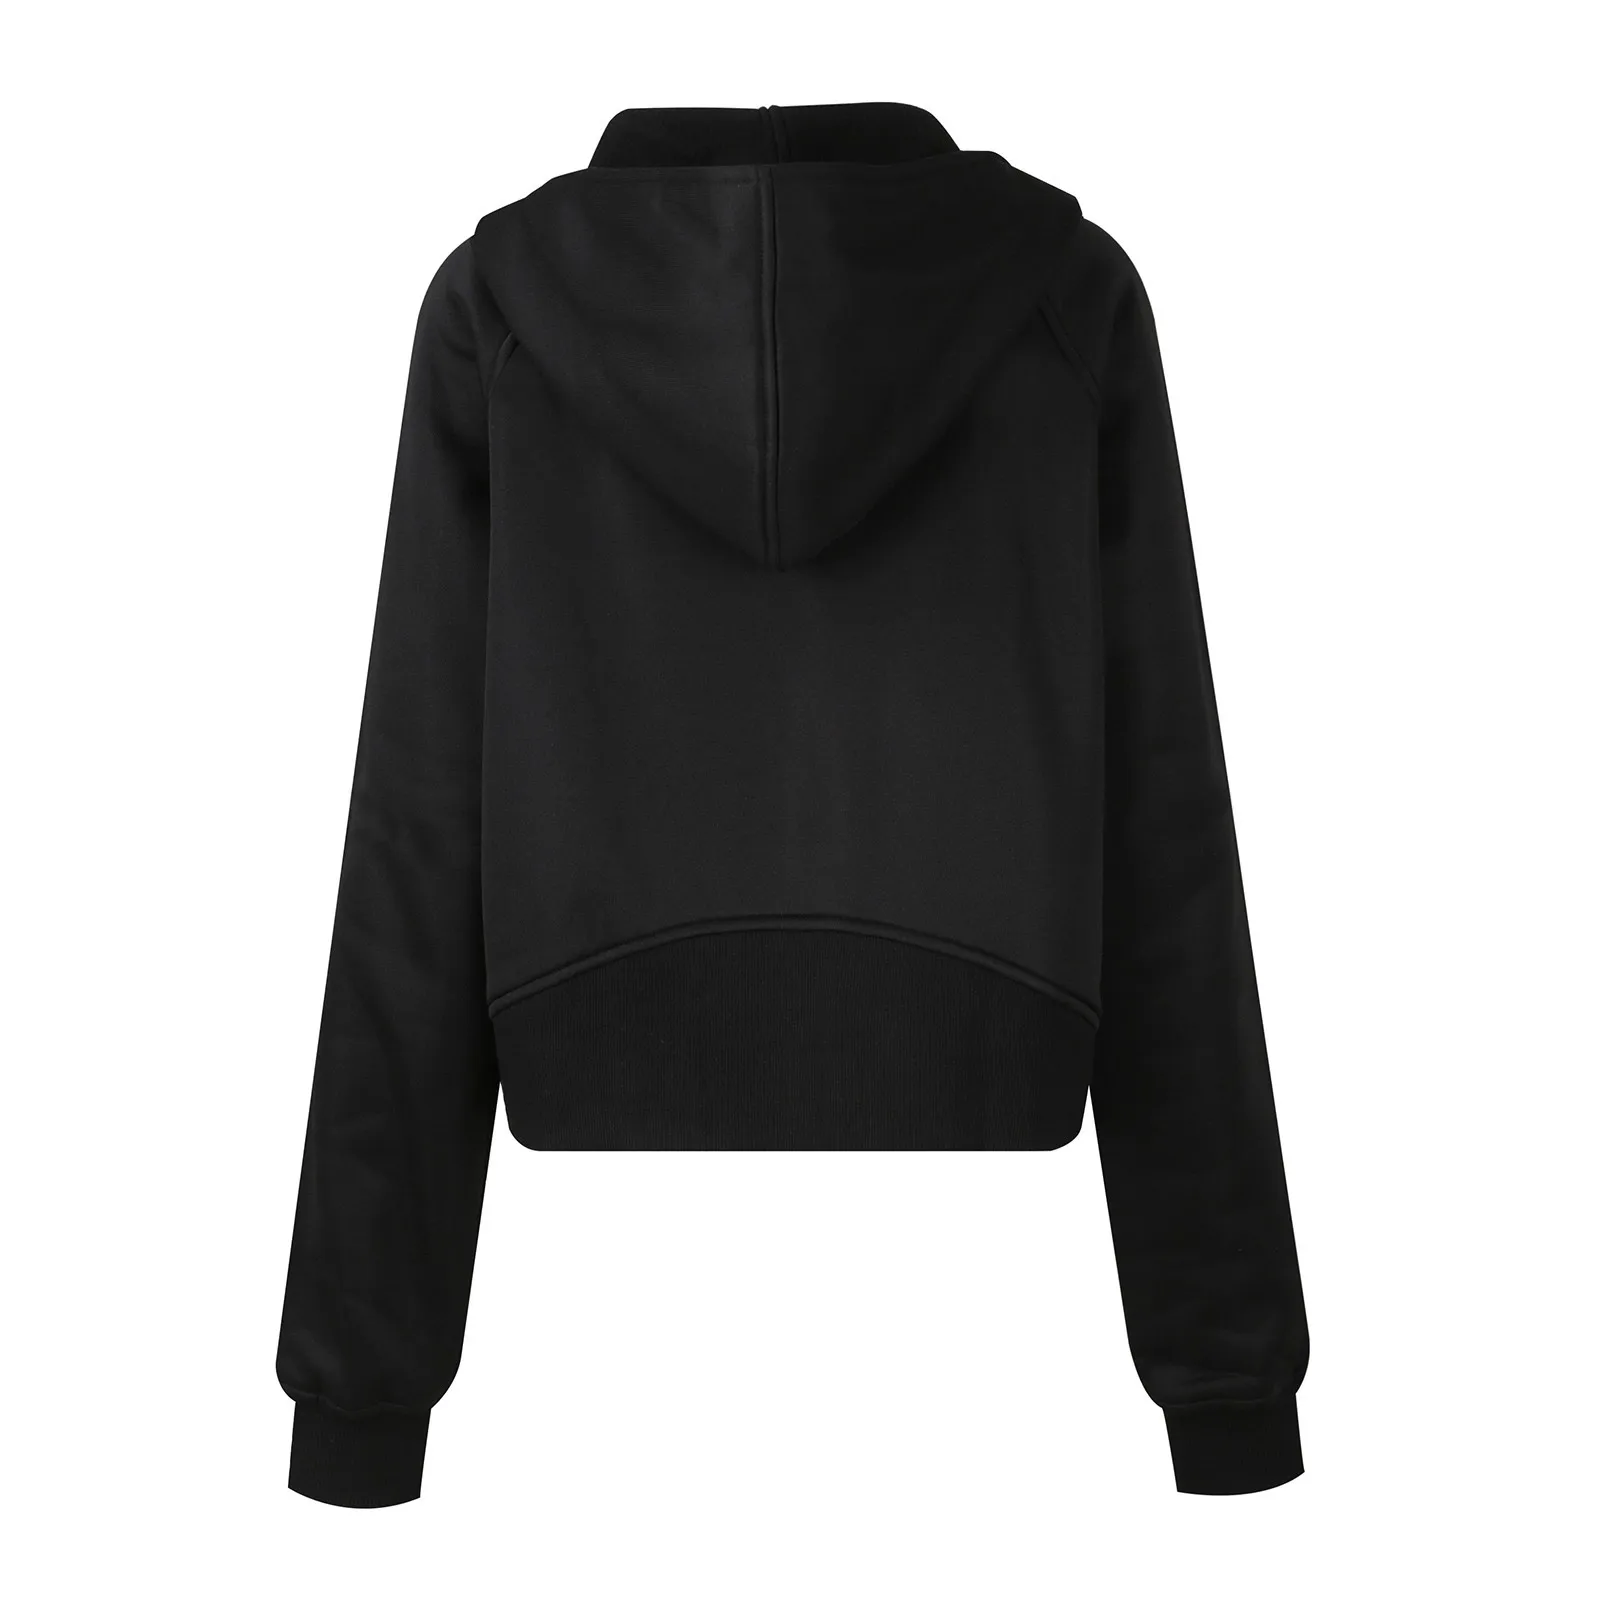 Women ' S Zip Up Hoodies Sweatshirts Clothes Teen Girl Casual Jackets Pockets With Roupas Femininas яке дамско палто дамско . ' - ' . 1